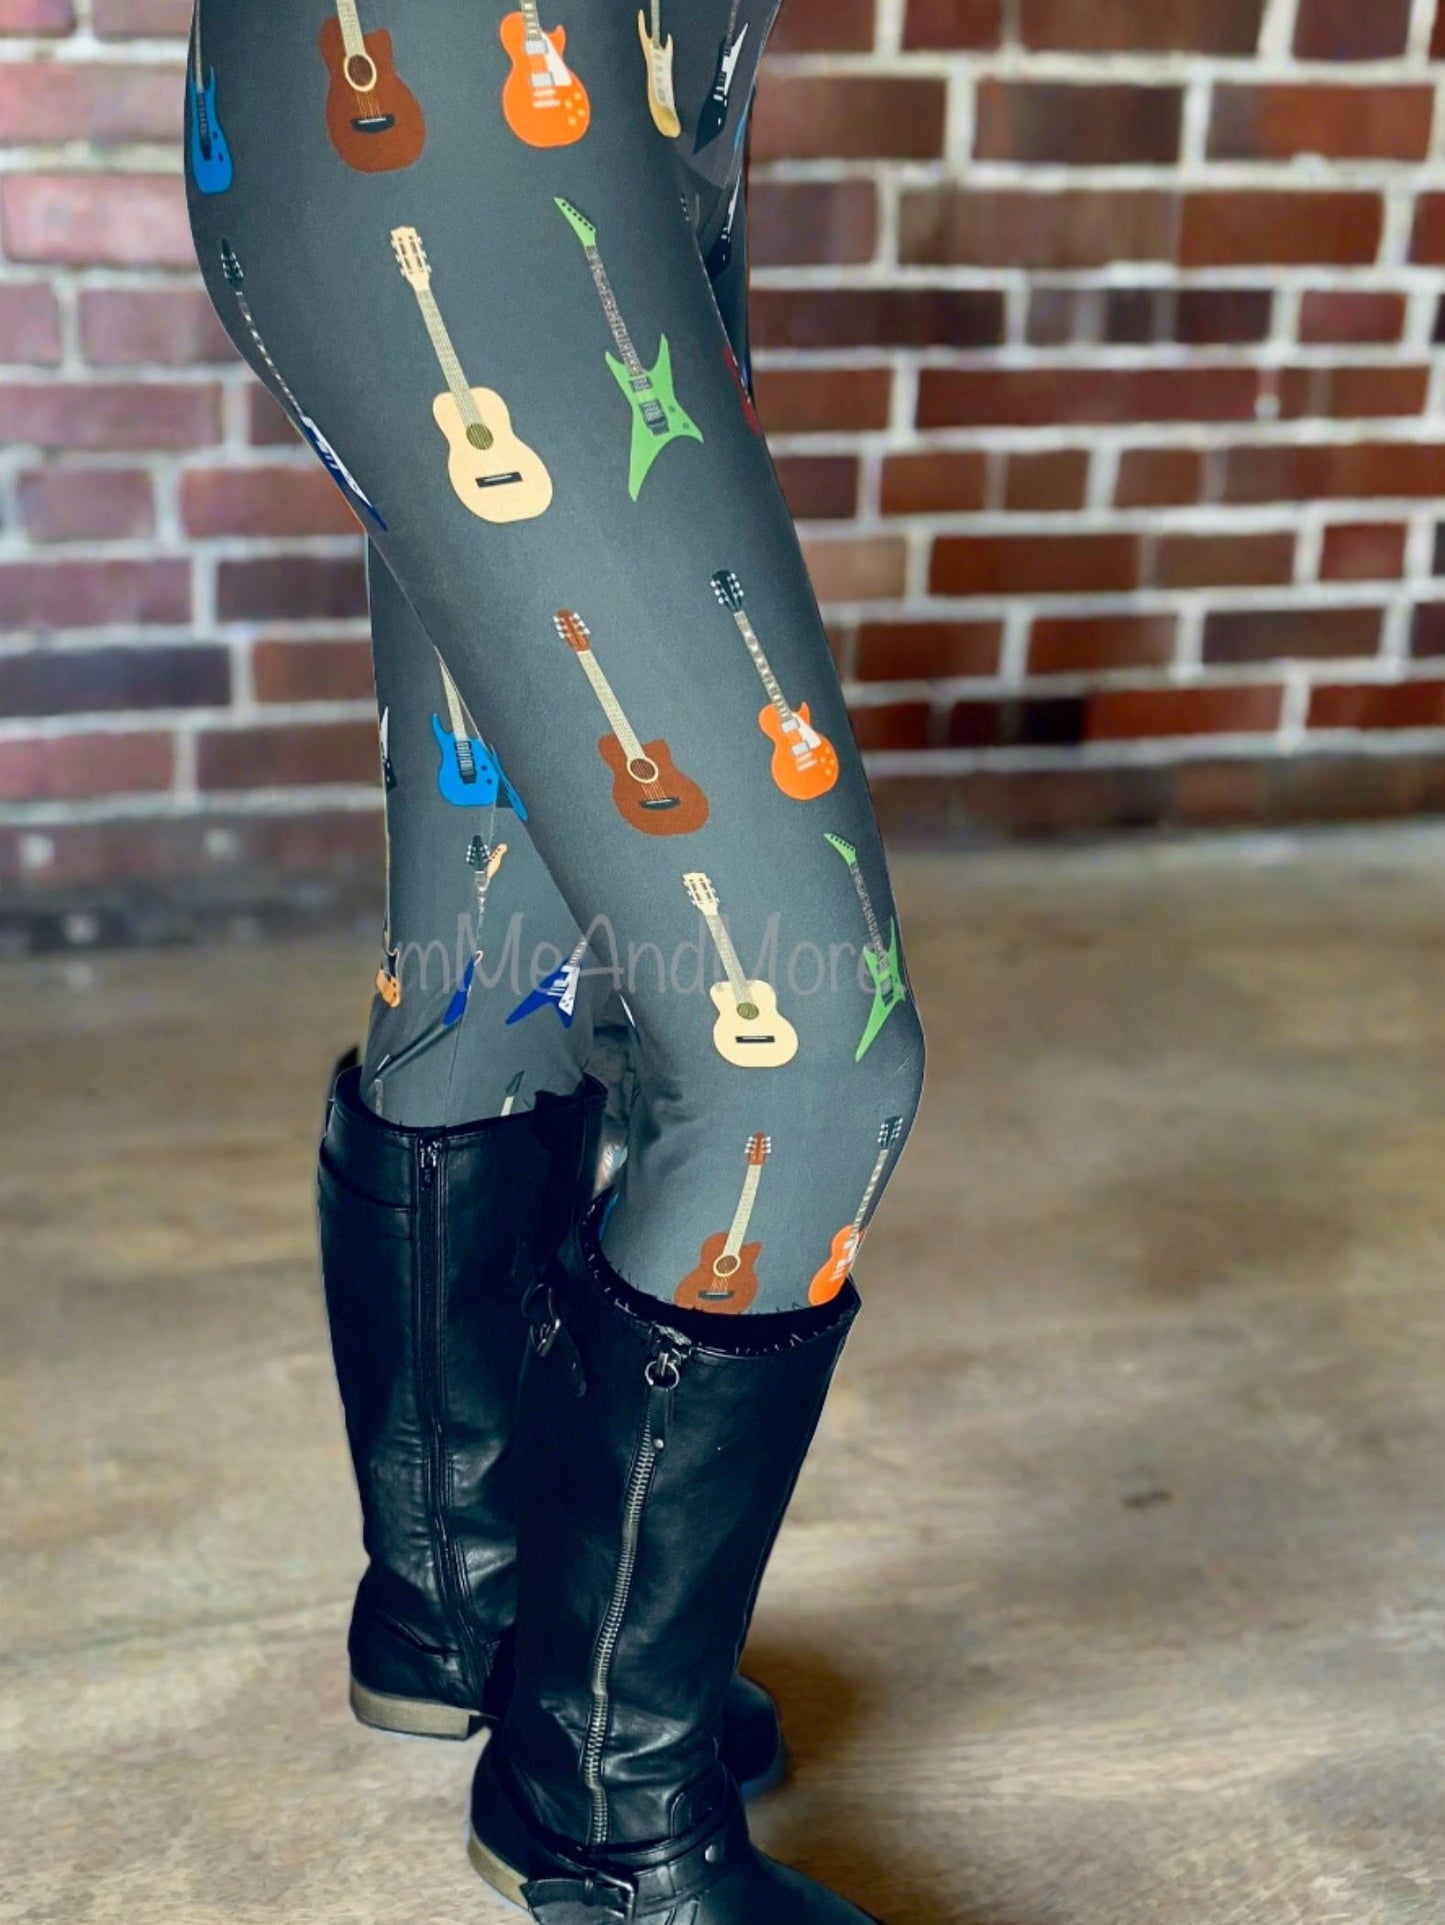 Womens Guitar Print Leggings Soft Yoga Pants Gray/Multi Sizes 0-22 Leggings MomMe and More 